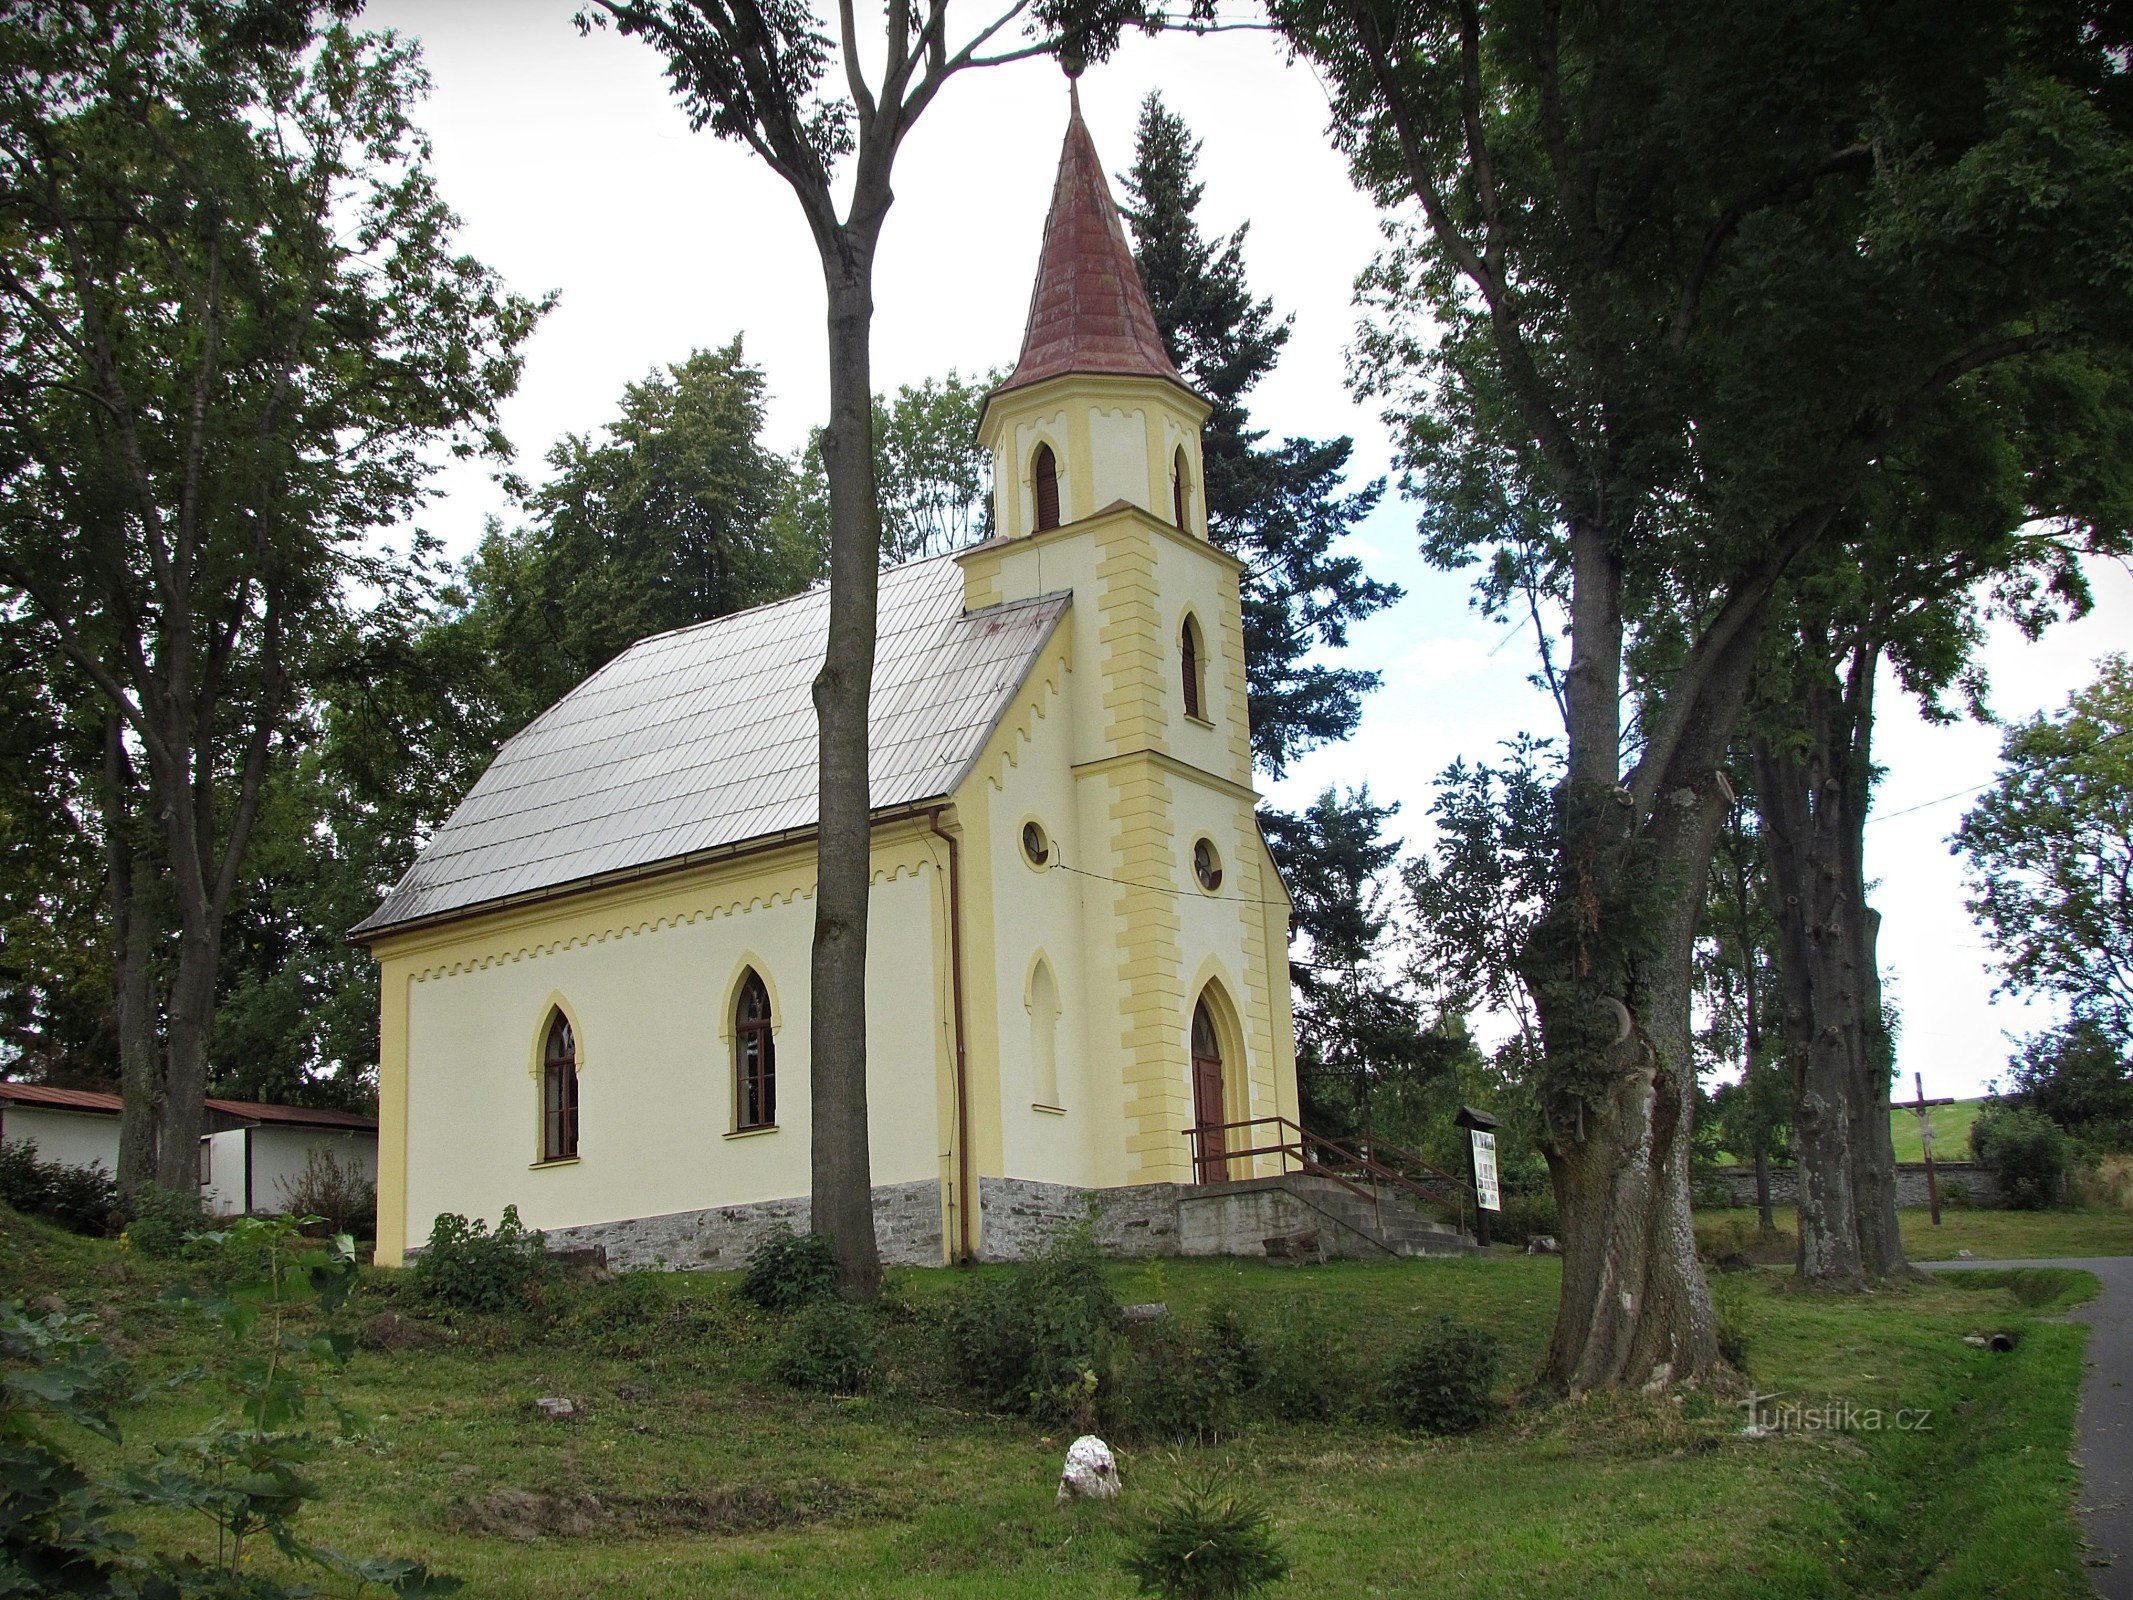 Nová Ves - widok na kaplicę św. Anny